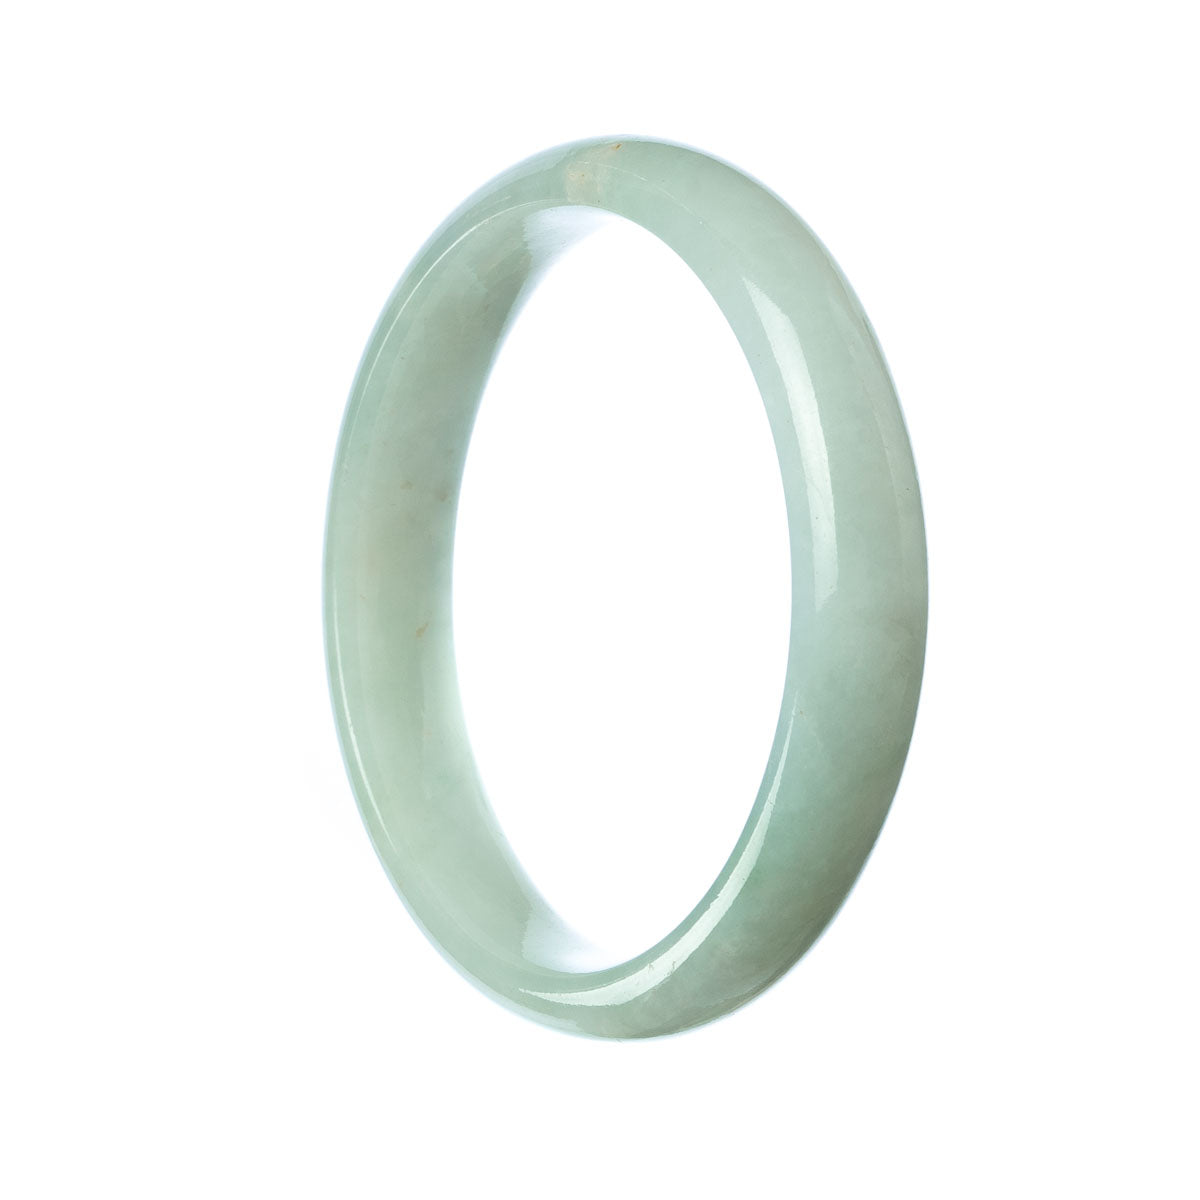 A pale green Burma Jade bangle bracelet with a half moon shape, certified as Grade A by MAYS GEMS.